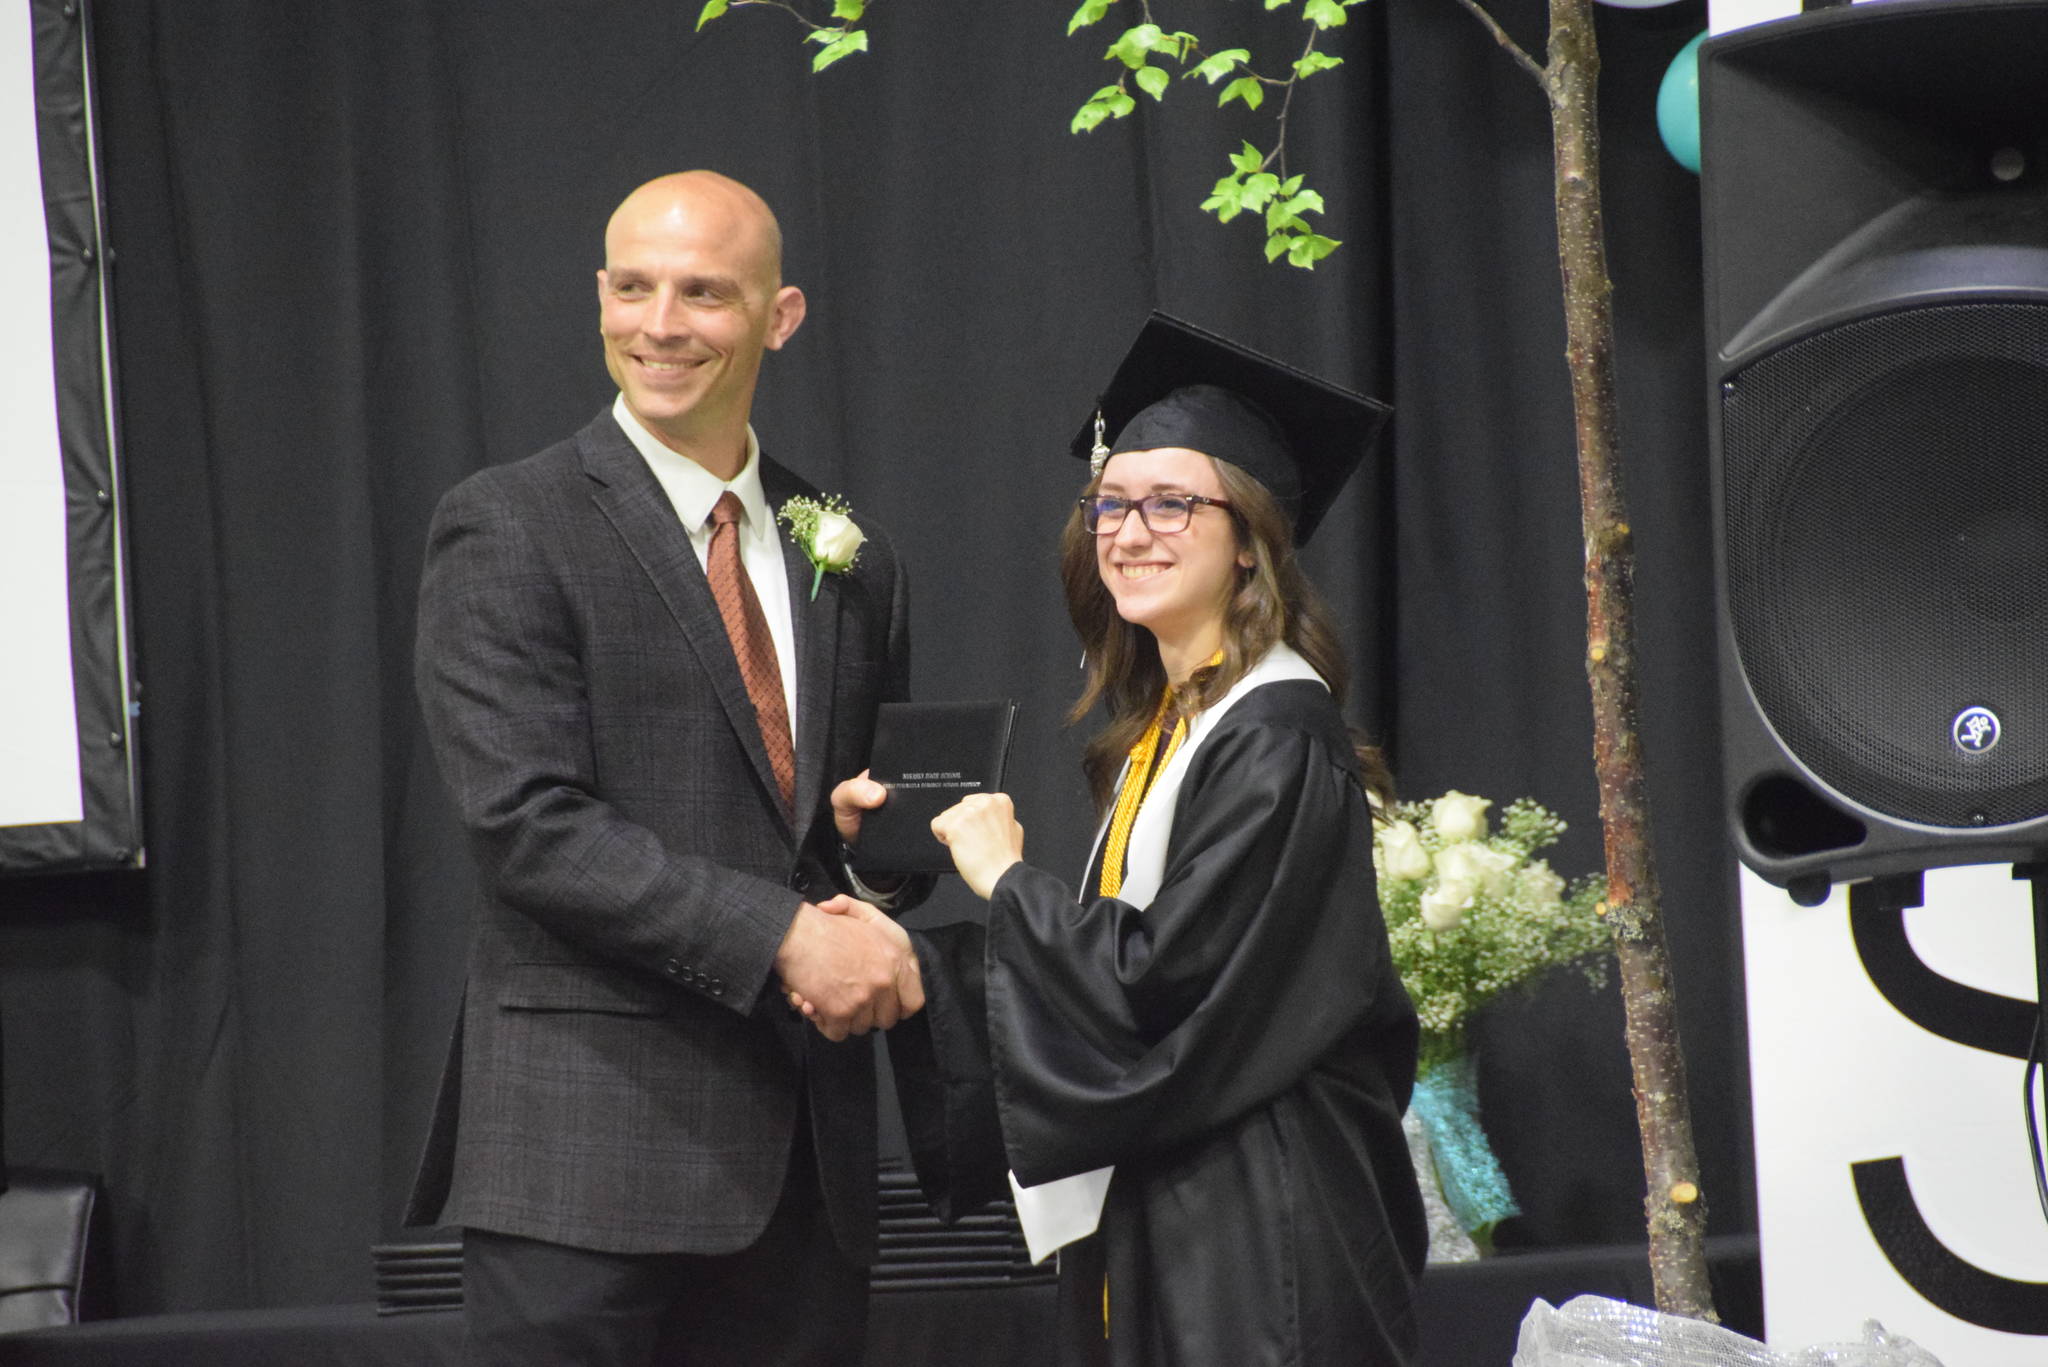 Carlee Rizzo receives her diploma from Principal Dan Carstens during the 2019 Nikiski High School graduation in Nikiski, Alaska on May 20, 2019. (Photo by Brian Mazurek/Peninsula Clarion)